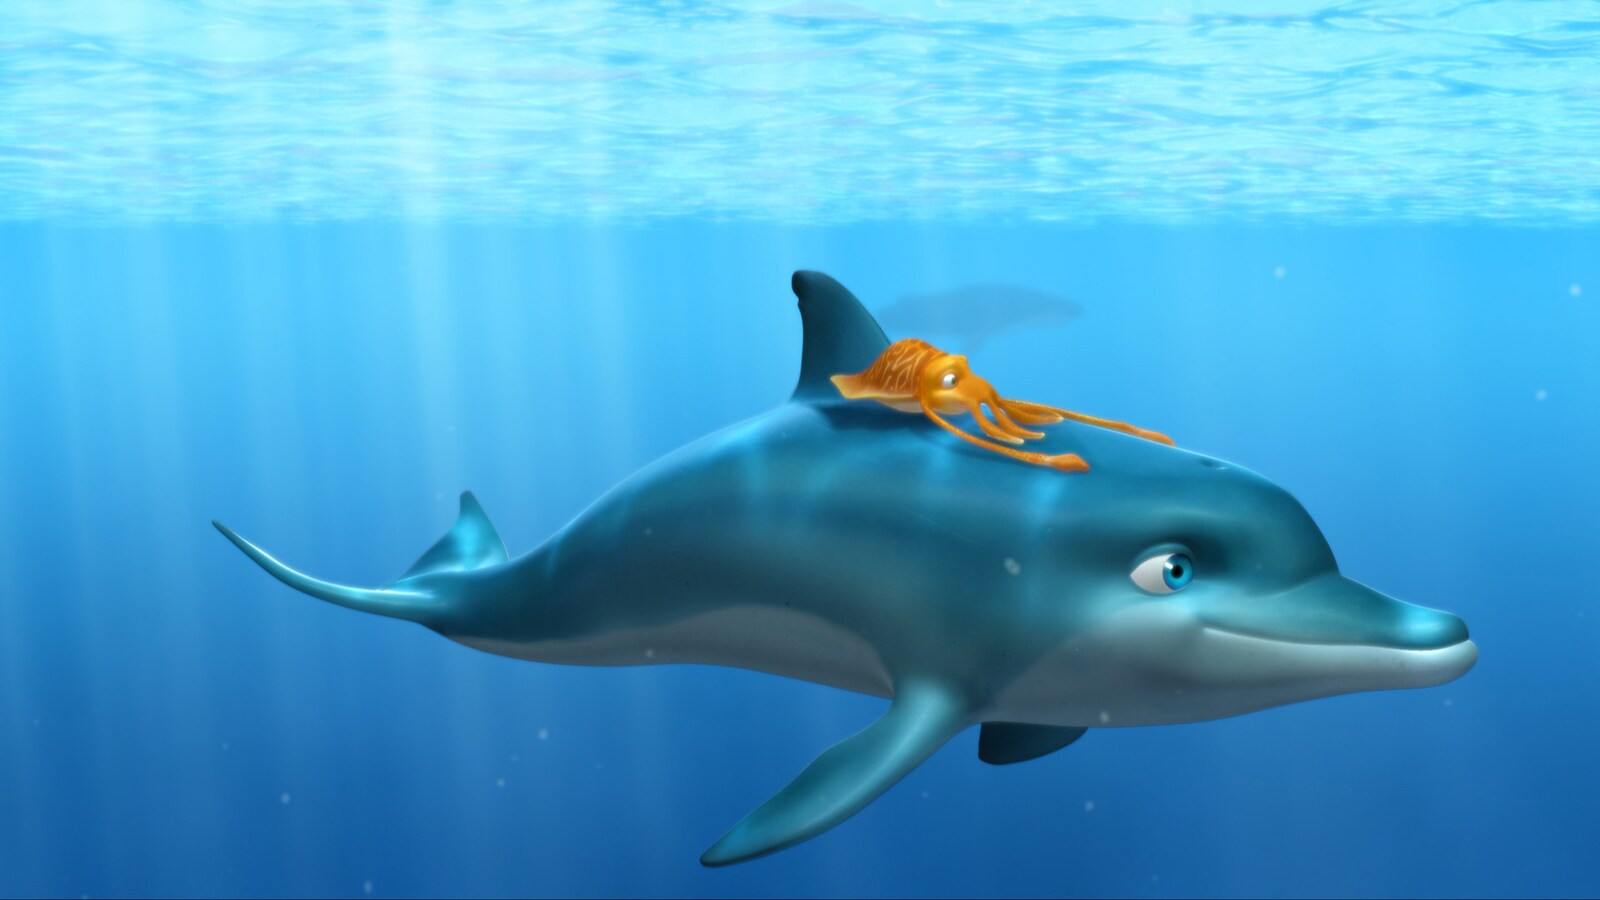 delfinen-i-det-stora-havet-2009